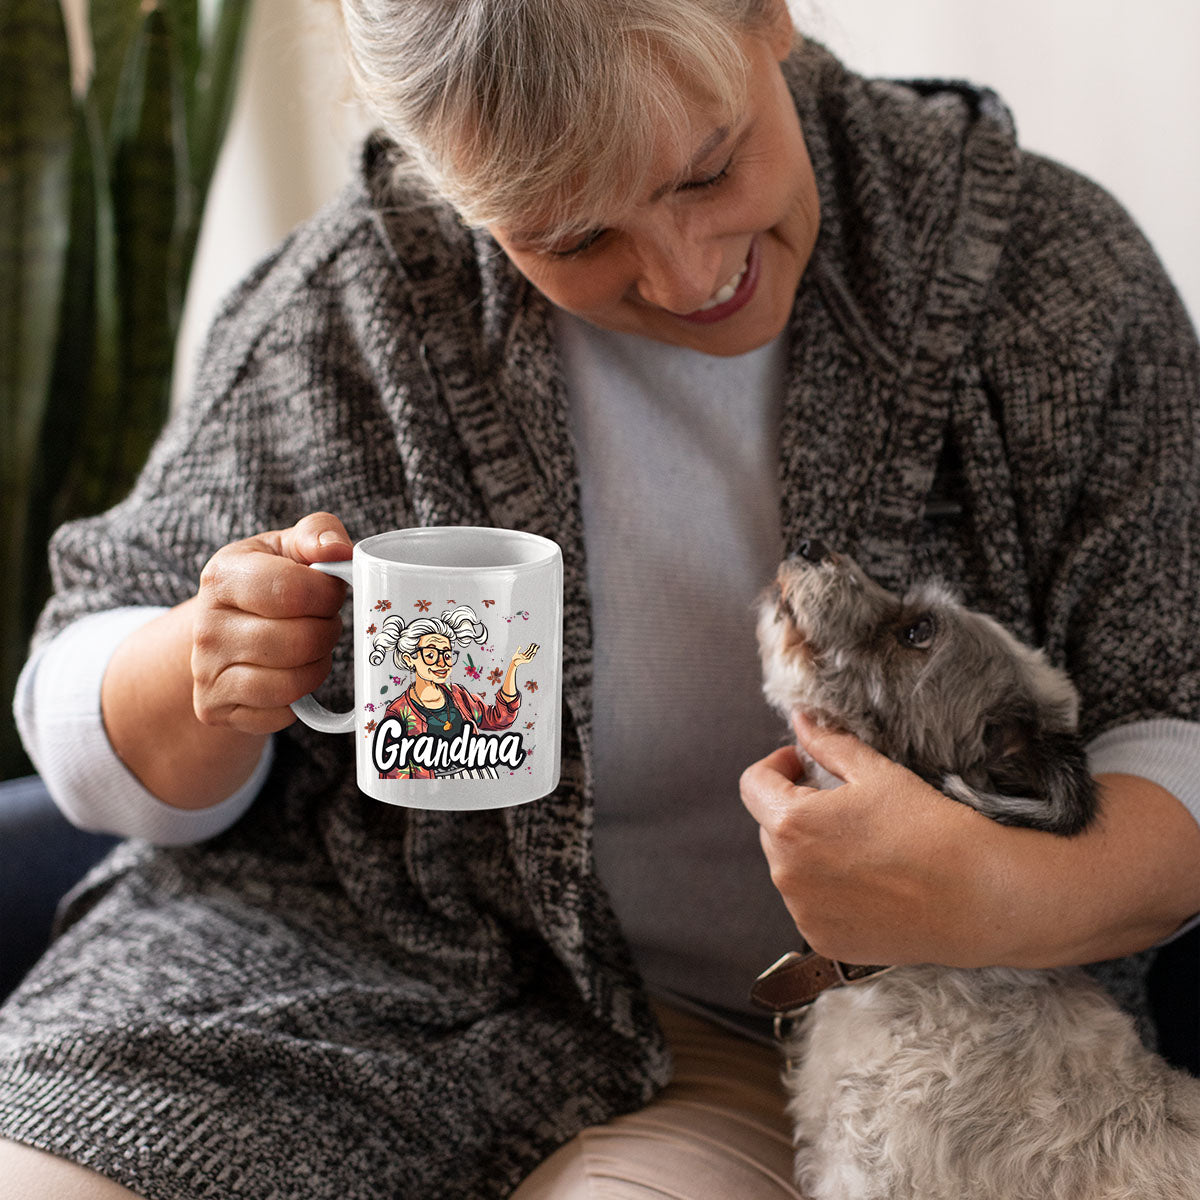 Grandma Mug, Grandma Gift For Grandma Birthday Gift Personalized Grandma Coffee Cup, Mothers Day Gift From Granddaughter Grandson, Grandma 4